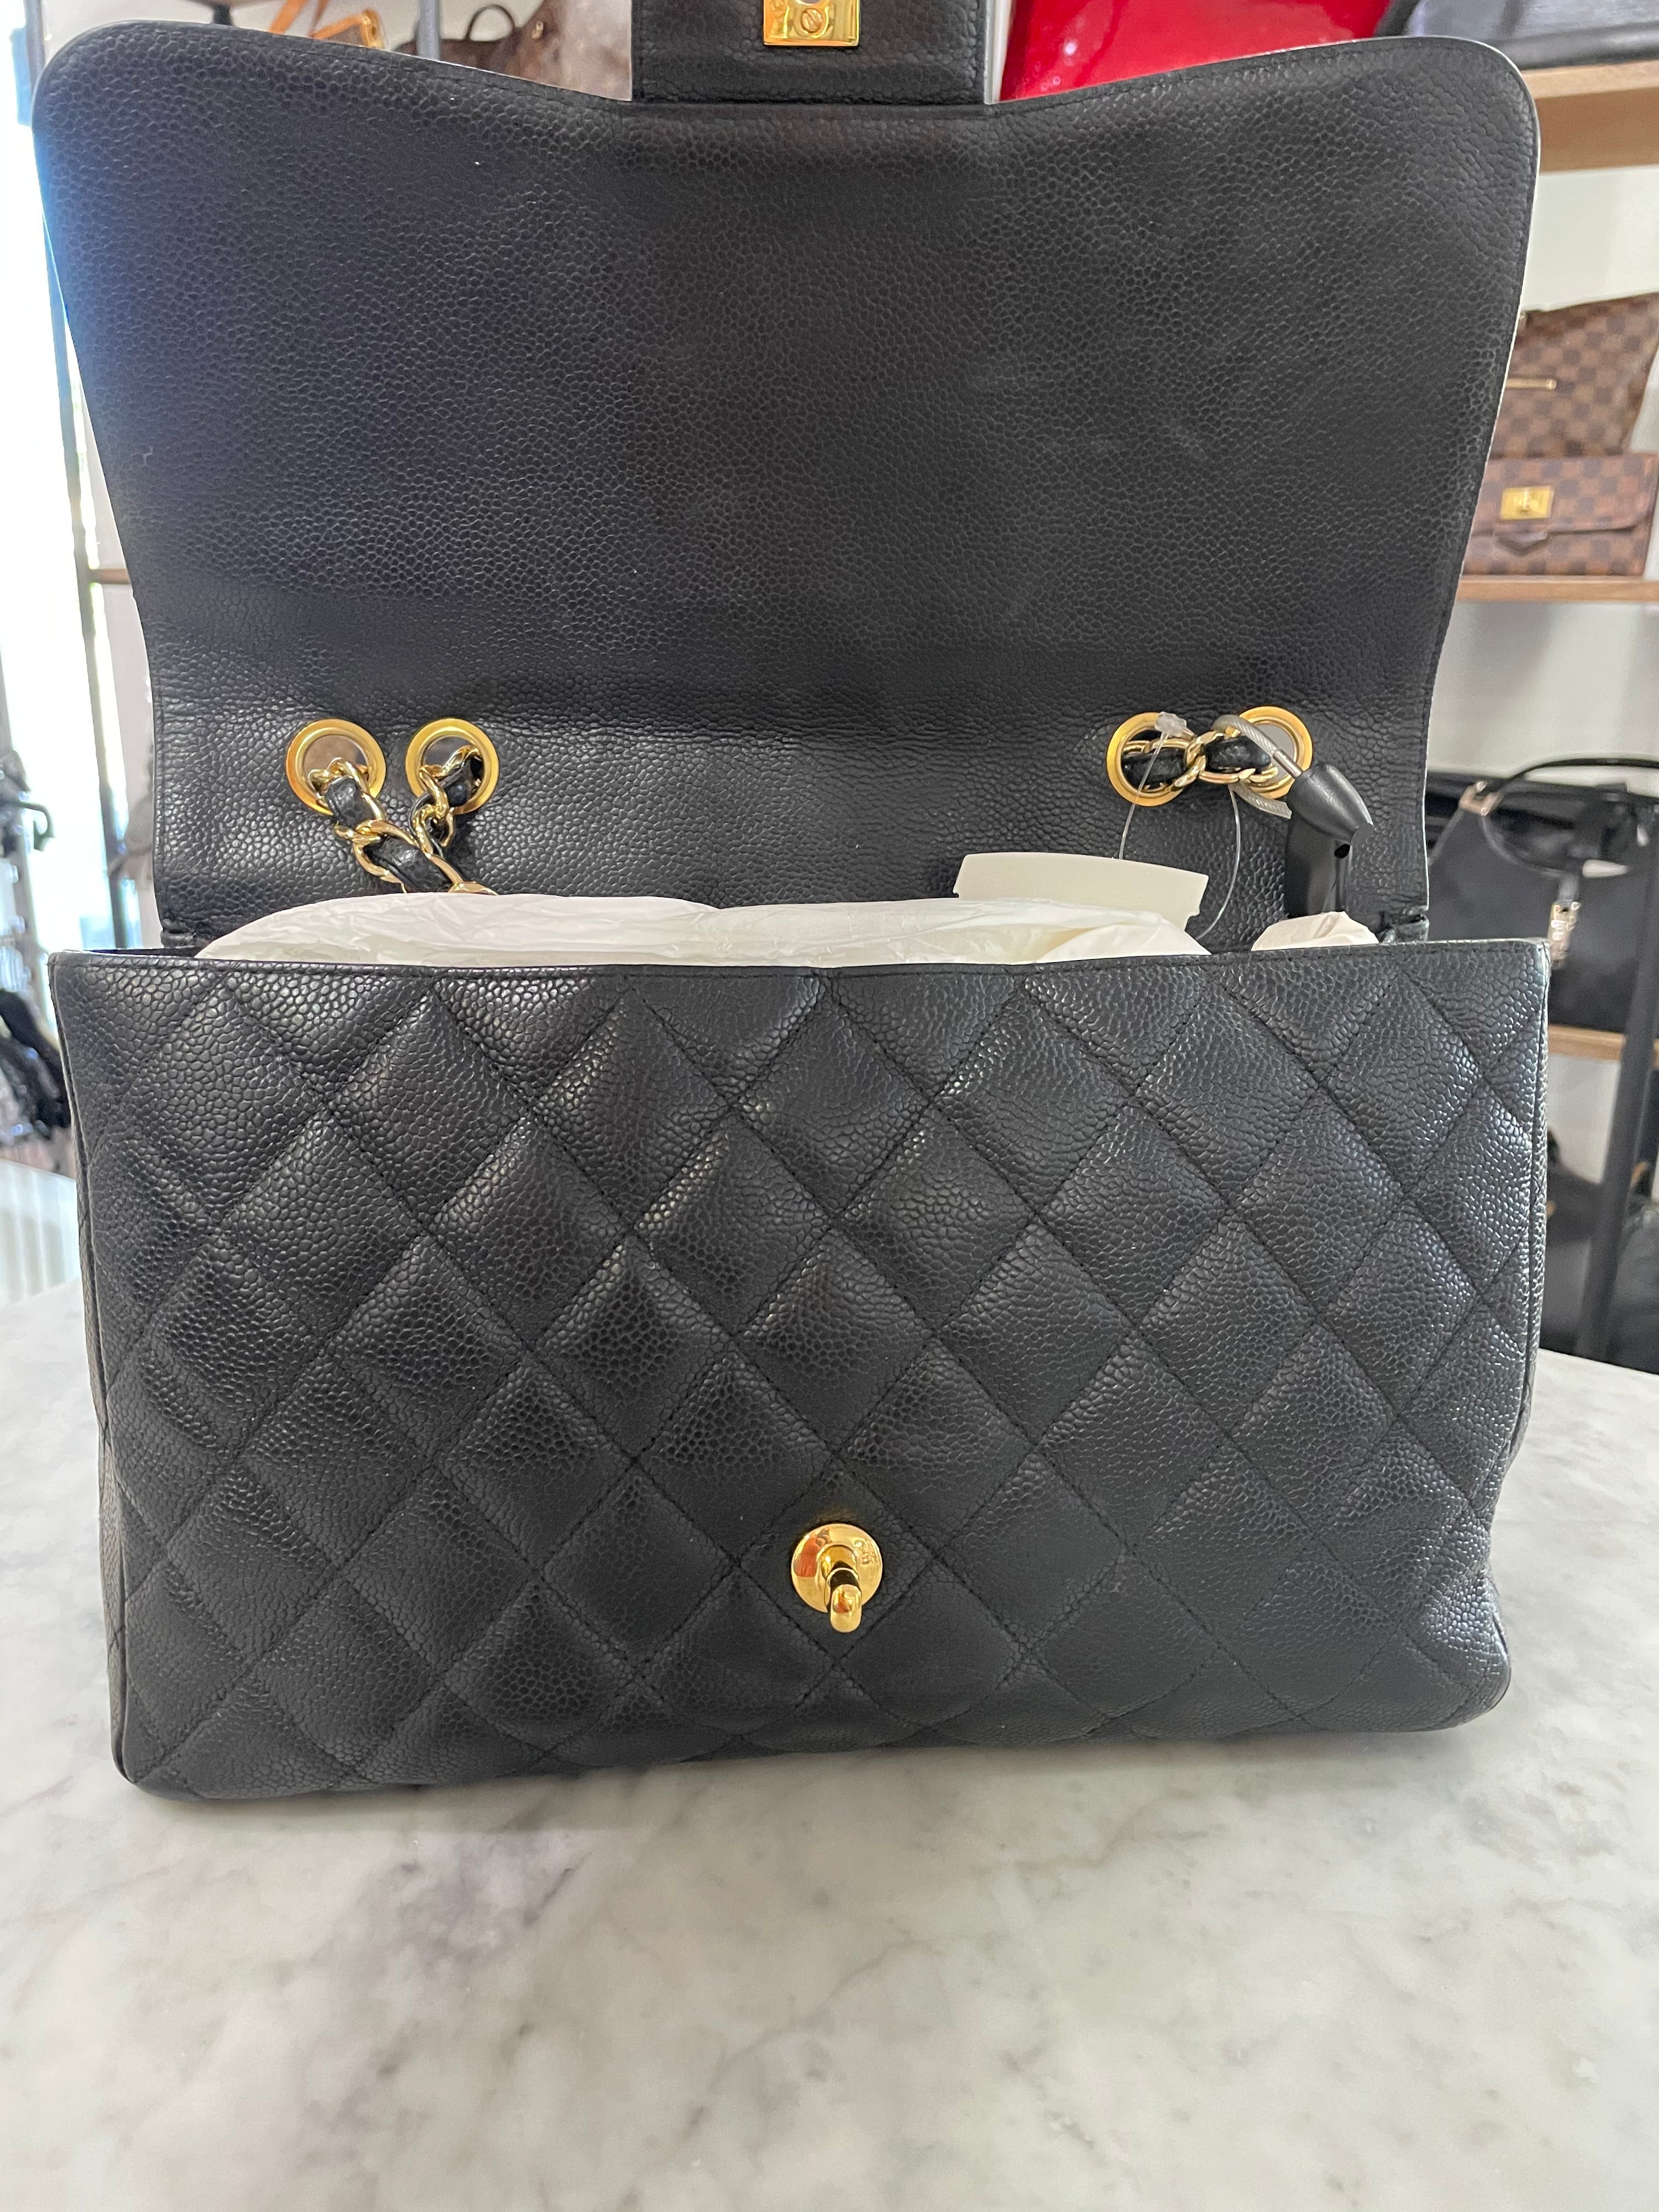 Chanel Big CC Vintage Flap Mini Bag for Sale in Yorba Linda, CA